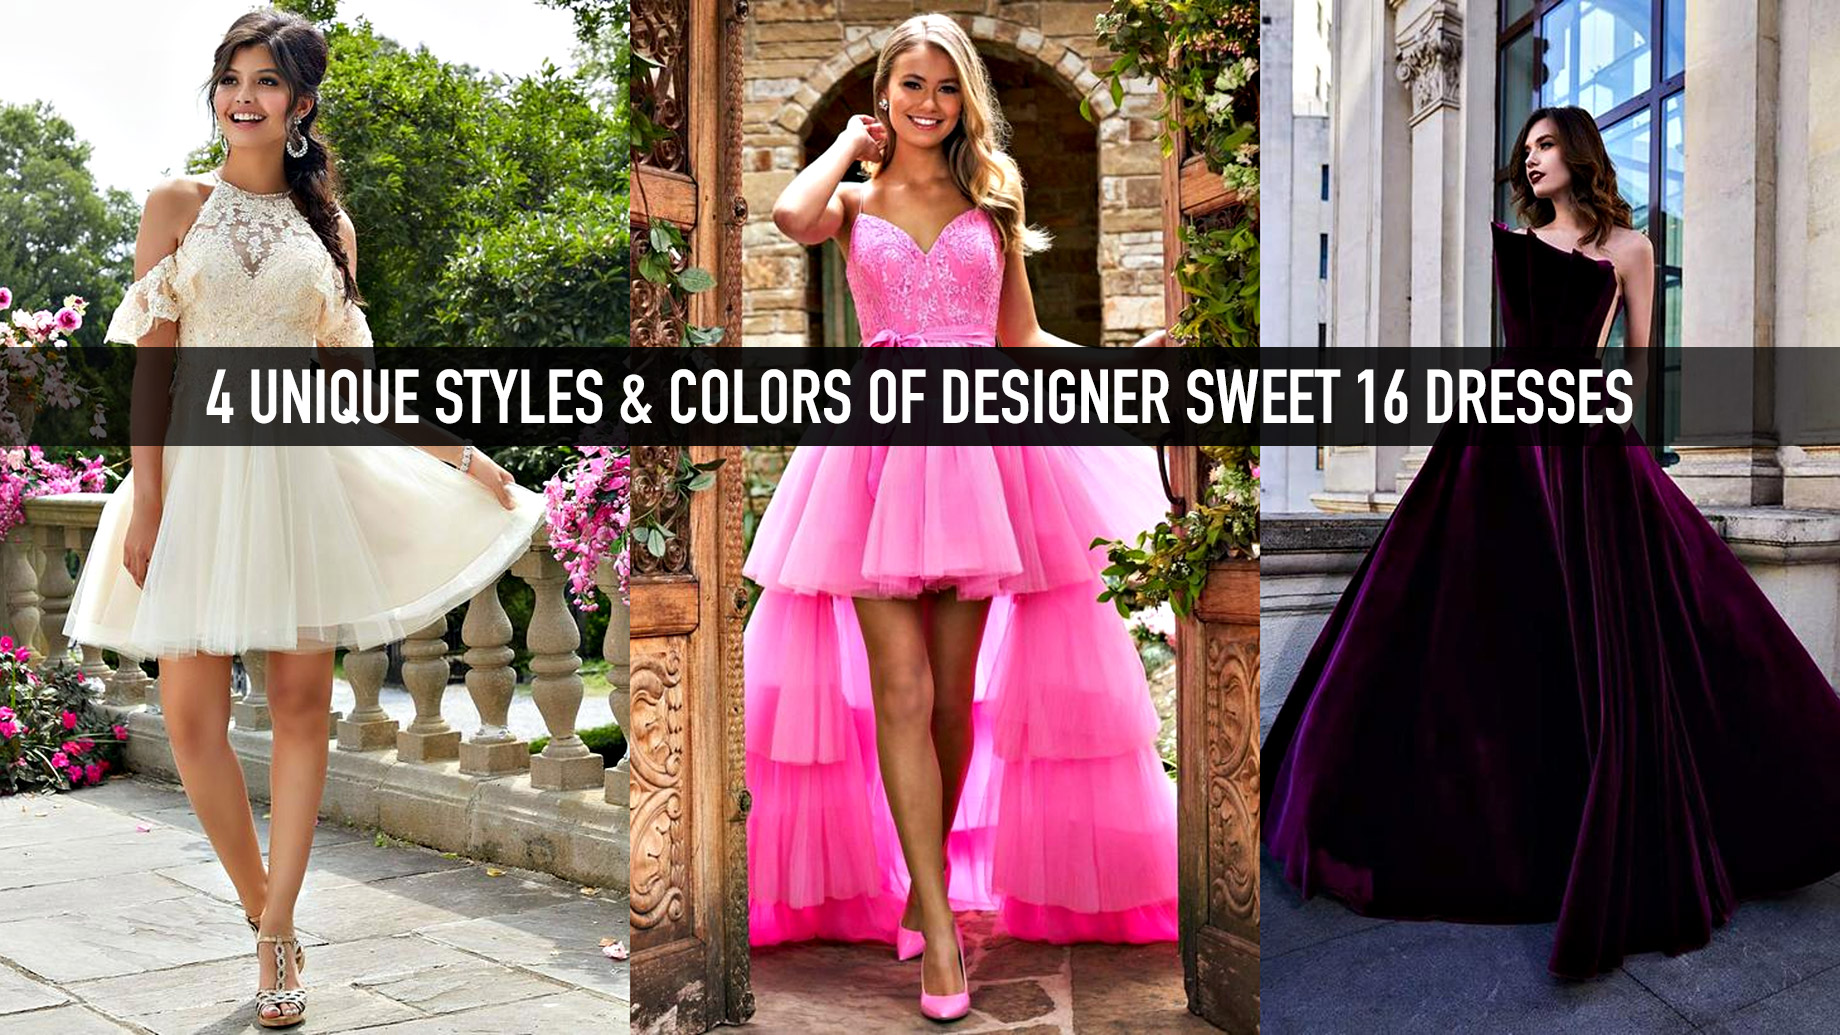 4 Unique Styles & Colors of Designer Sweet 16 Dresses